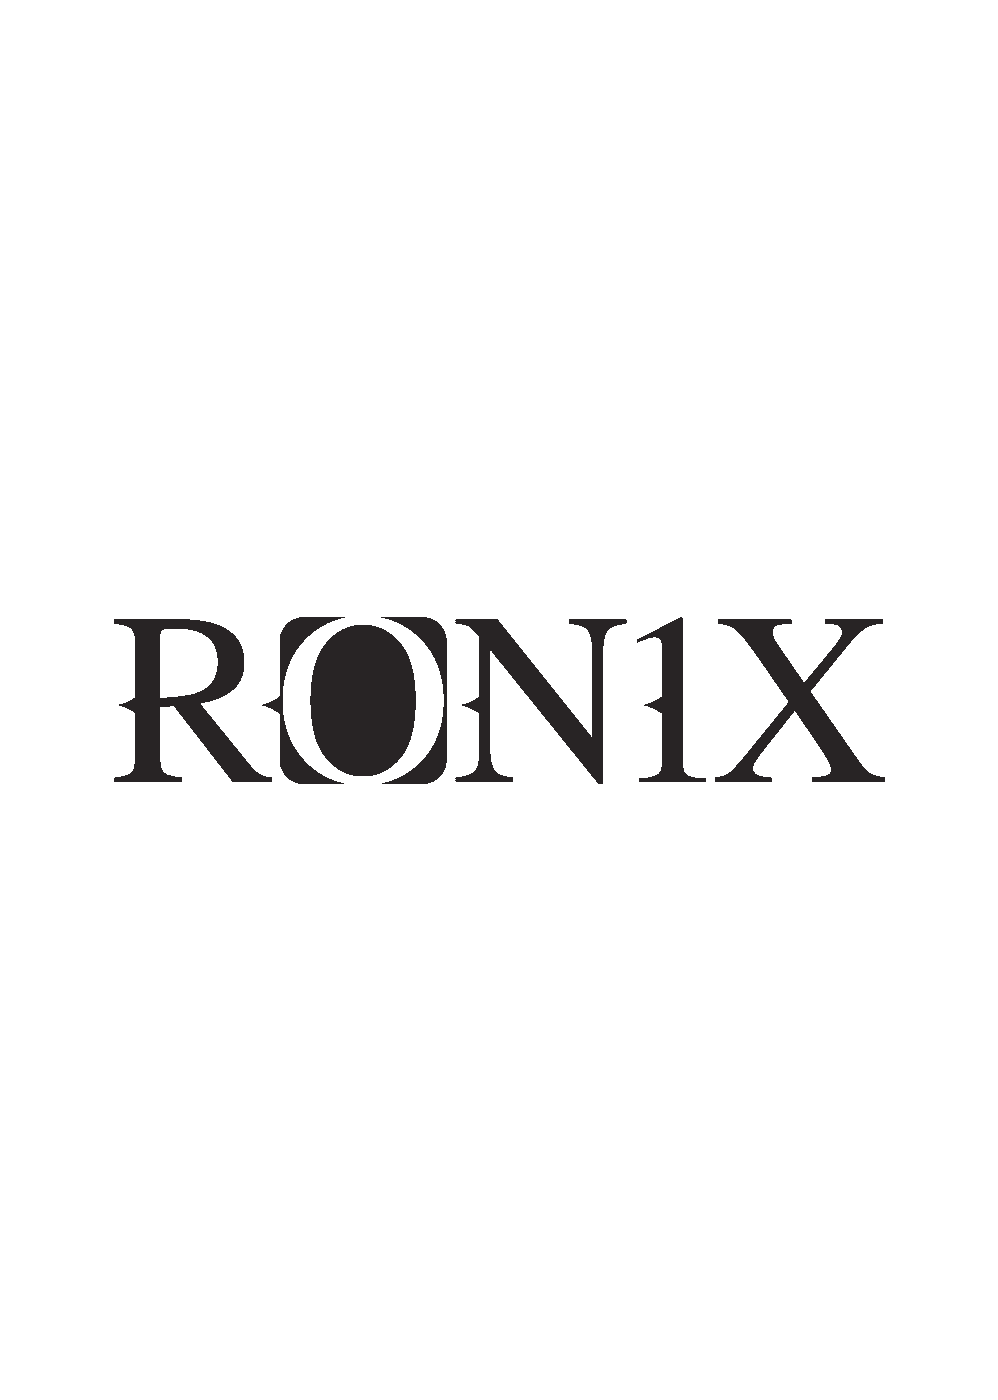 RONIX-STICKER-SMALL